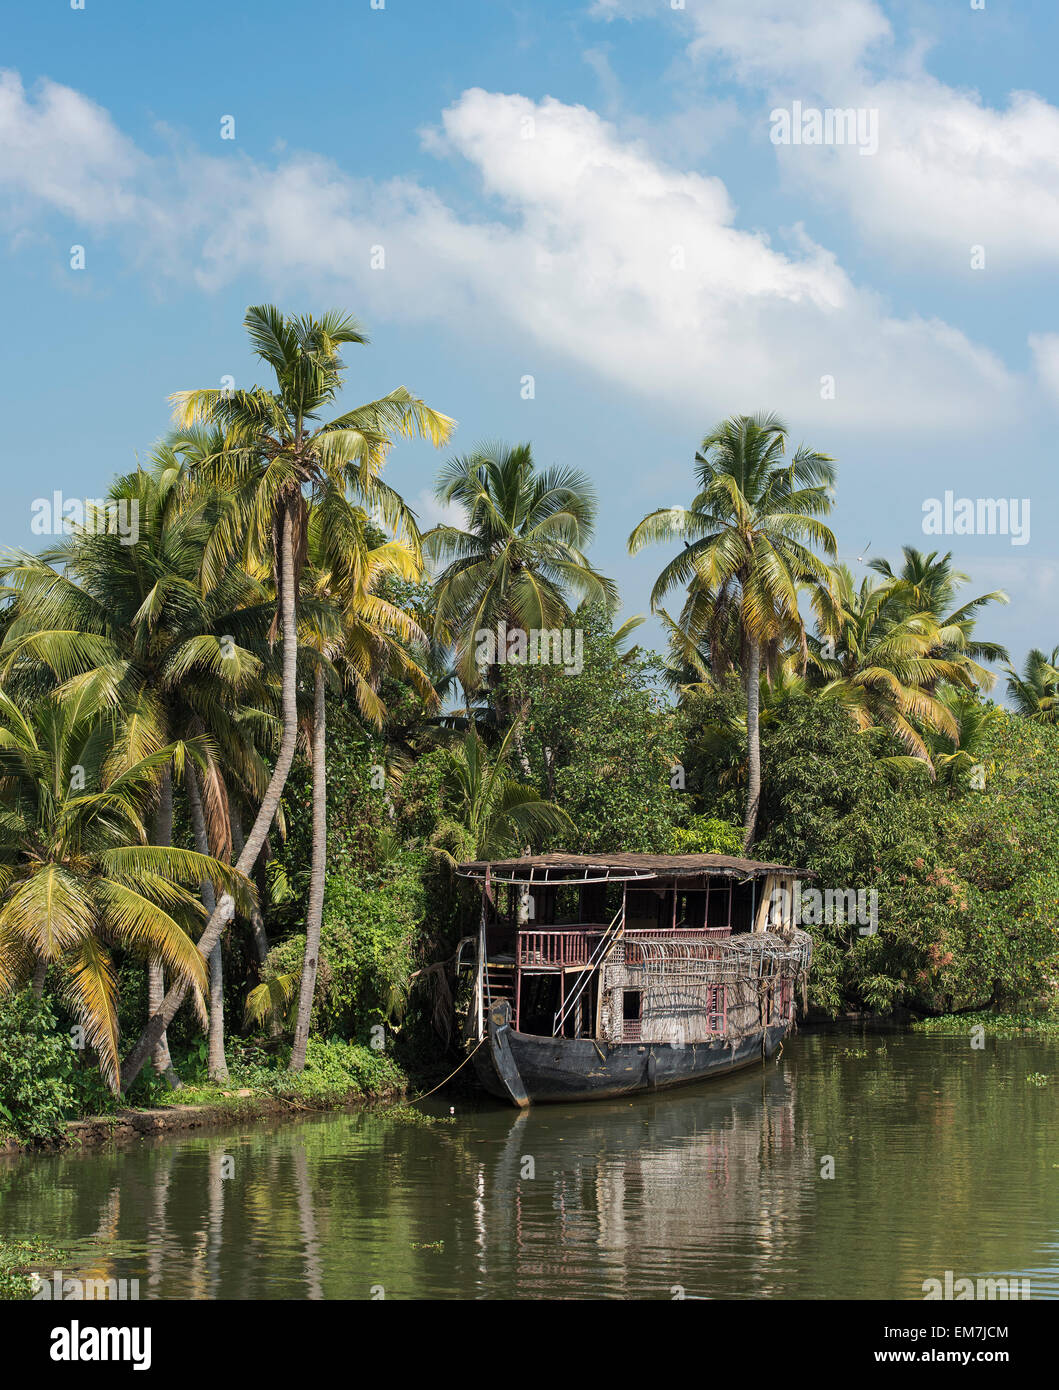 Vecchia barca, Palm tree orlata backwaters canal system, Kerala, Costa di Malabar, Sud India, India Foto Stock